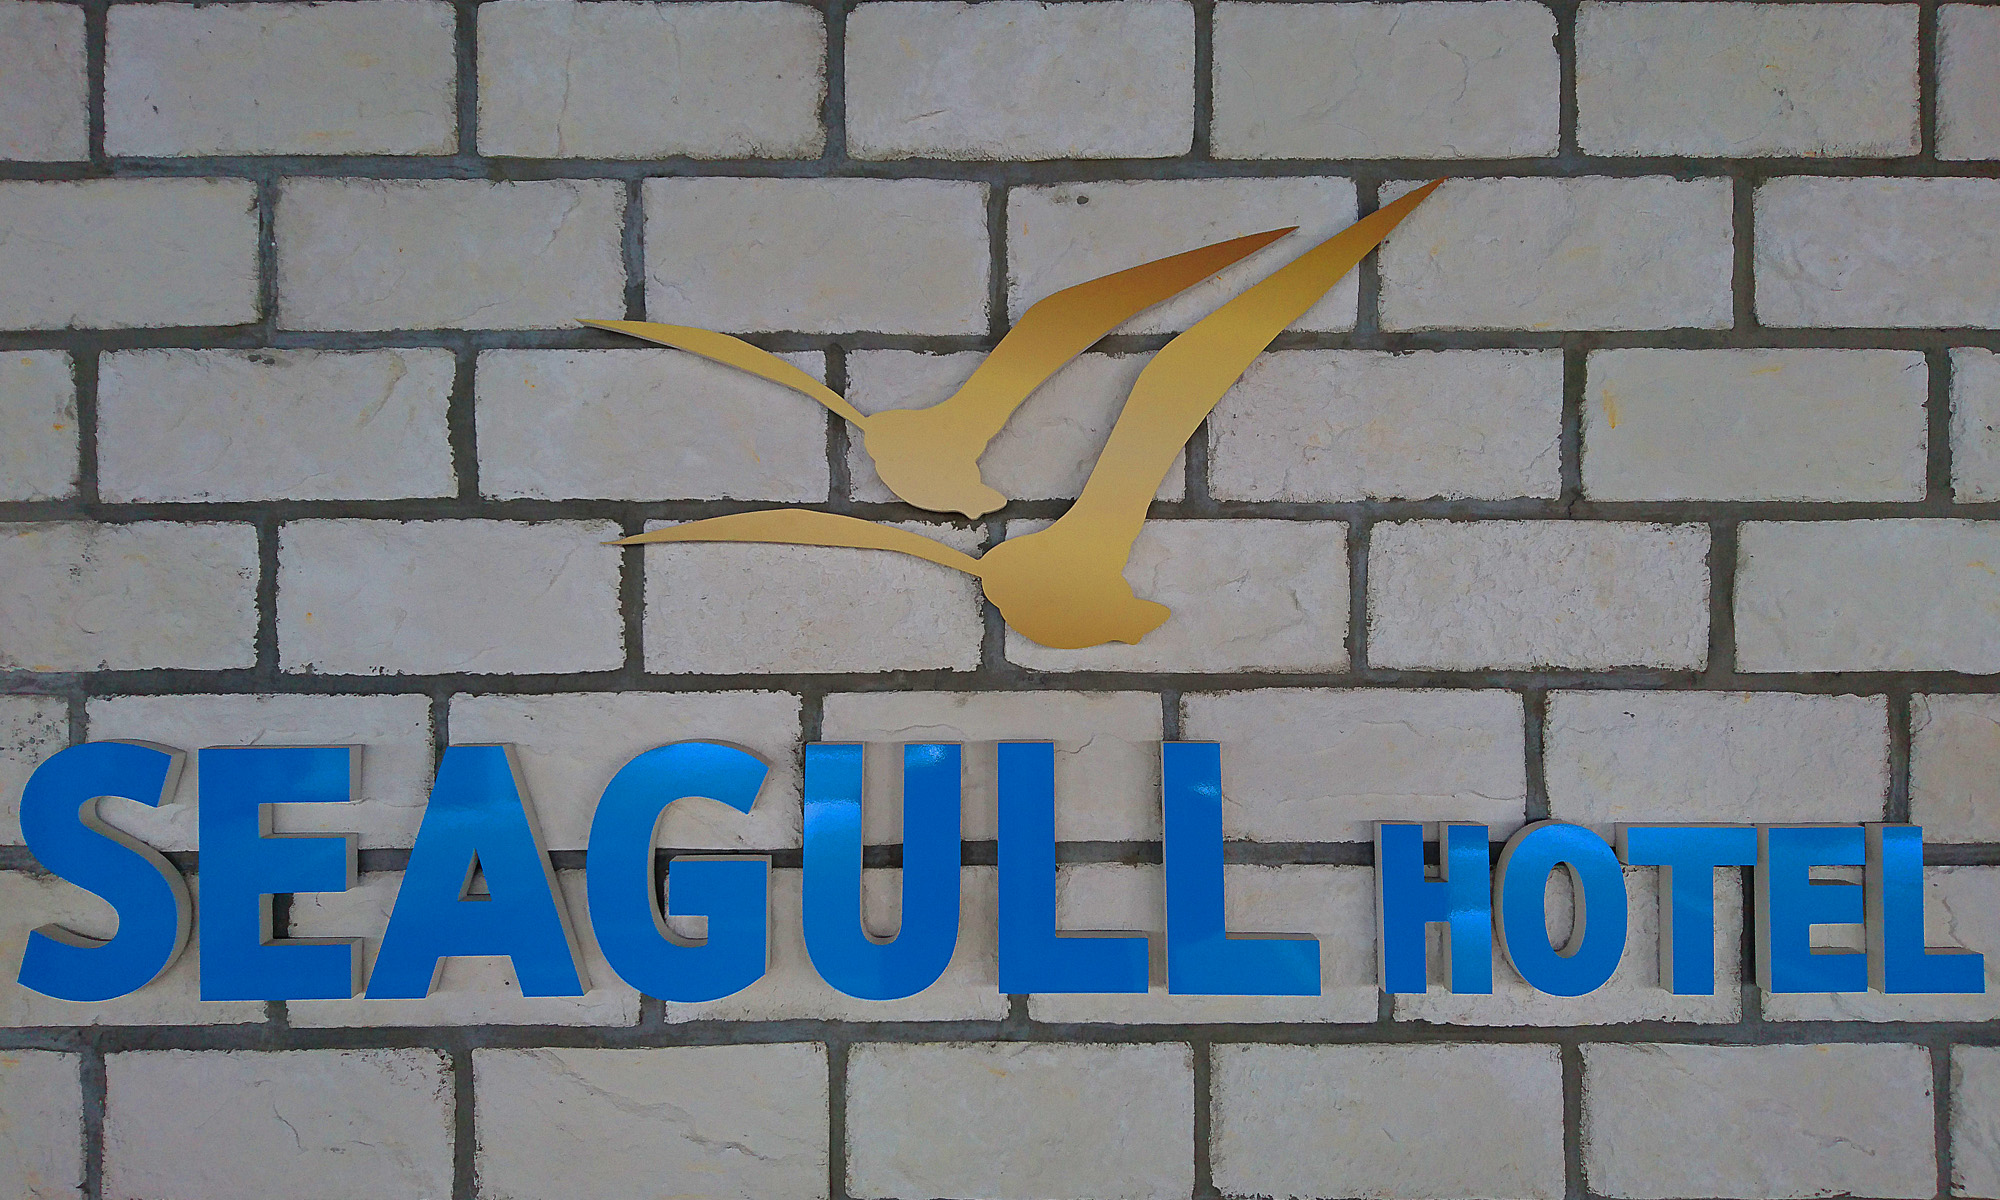 SEAGULL HOTEL